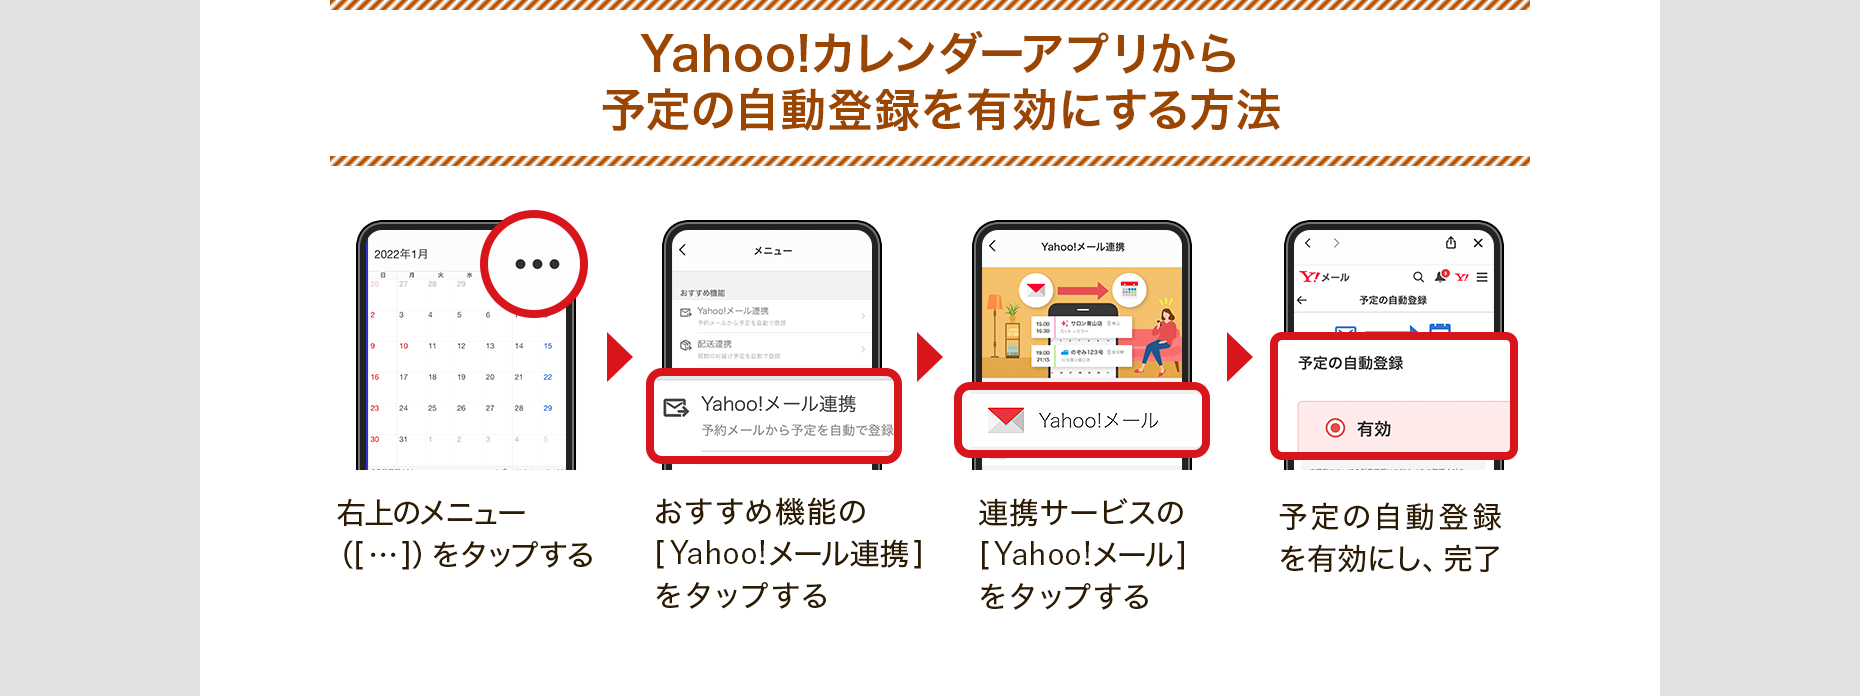 Yahoo!カレンダーアプリから予定の自動登録を有効にする方法 